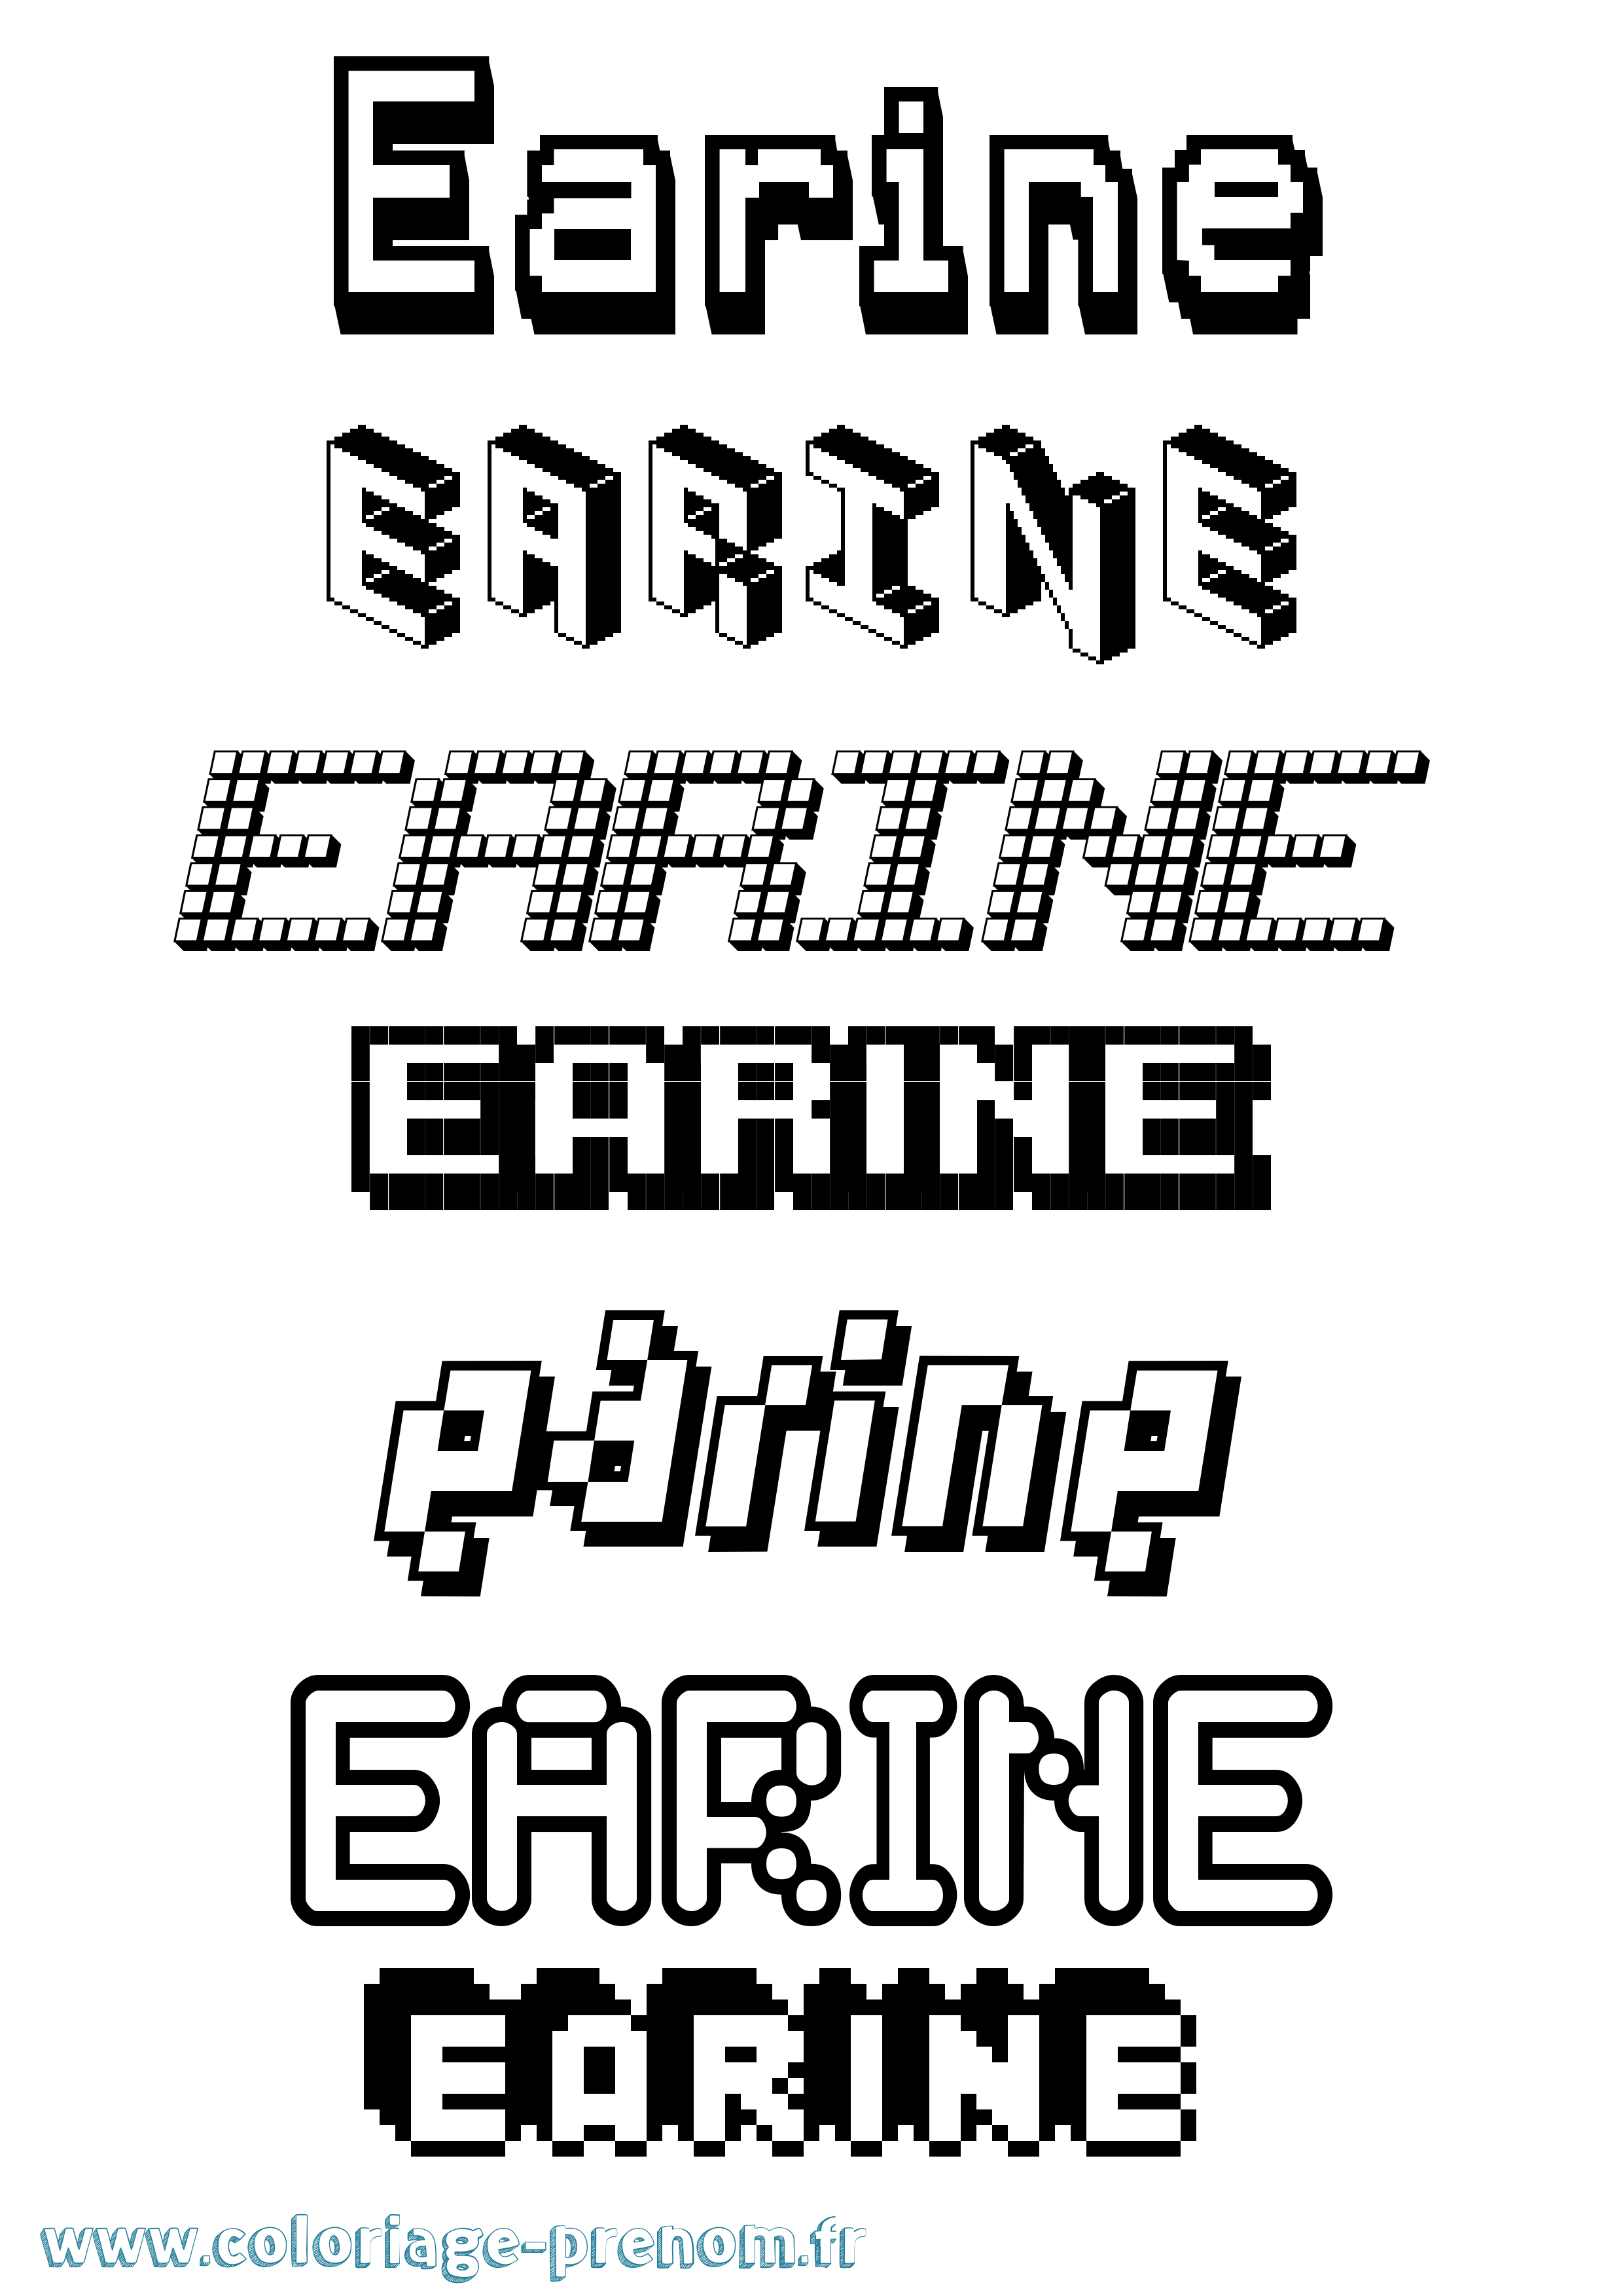 Coloriage prénom Earine Pixel